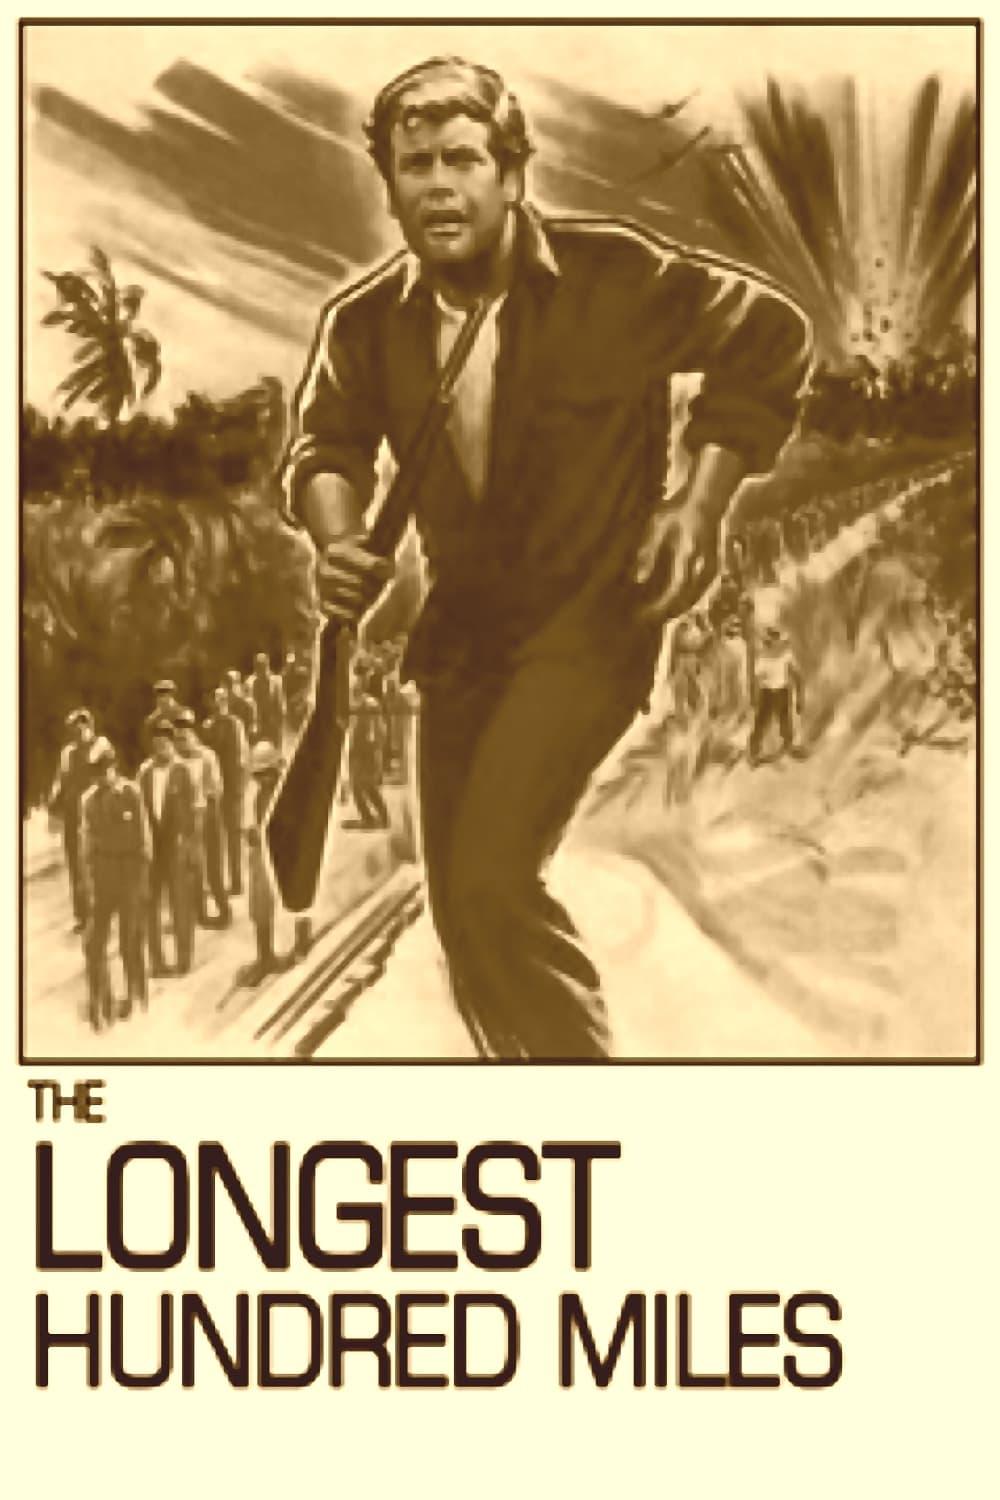 The Longest Hundred Miles poster